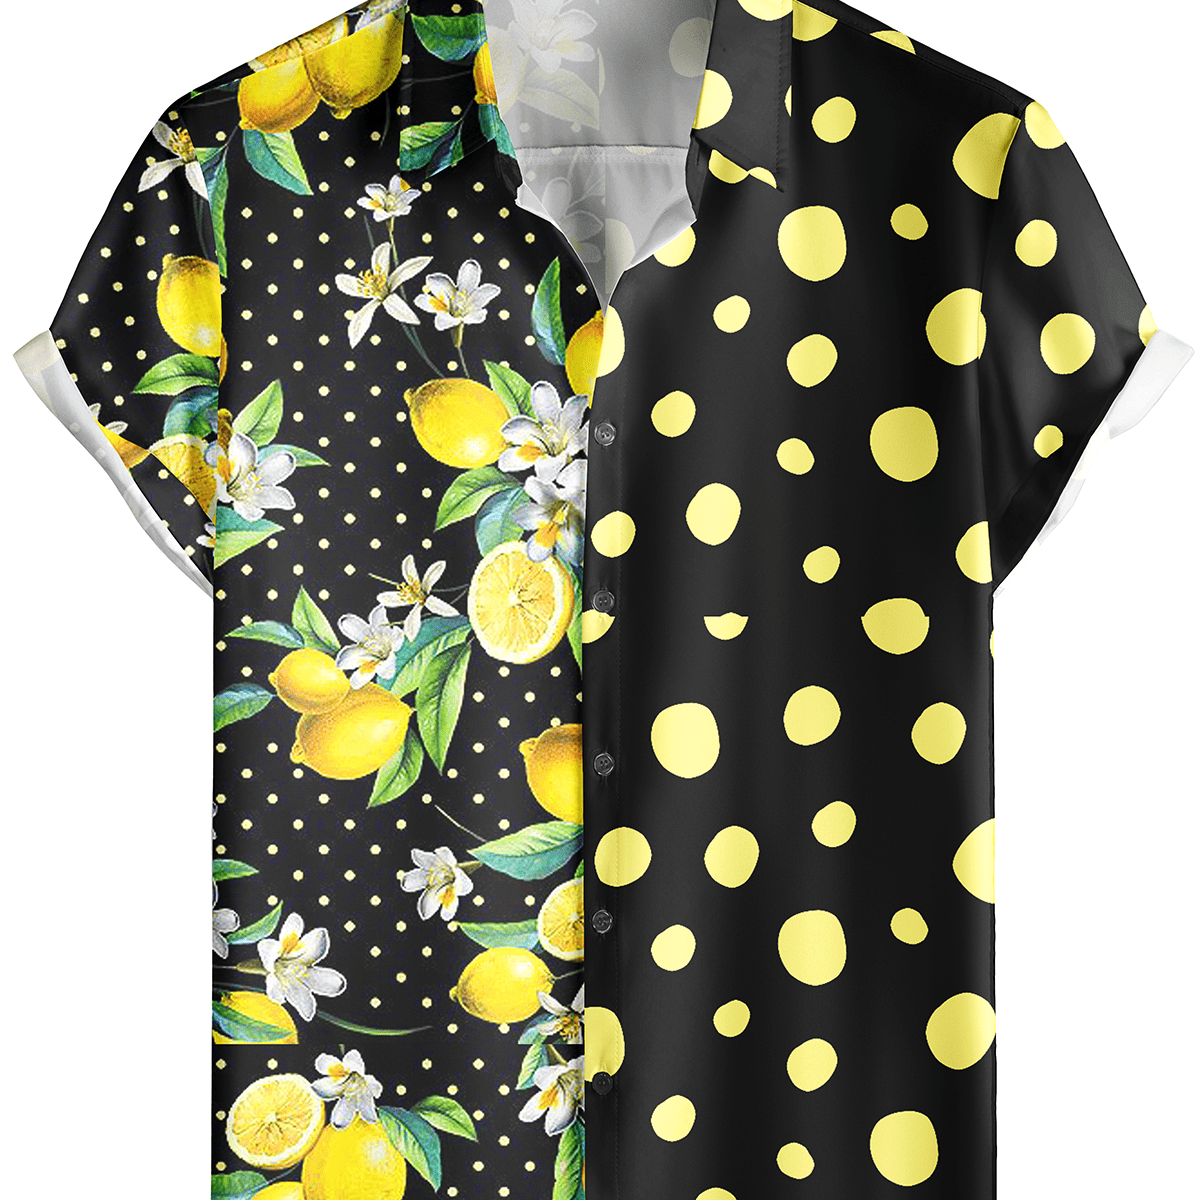 Men's Lemon Polka Dot Patchwork Print Short Sleeve Vacation Button Up Shirt